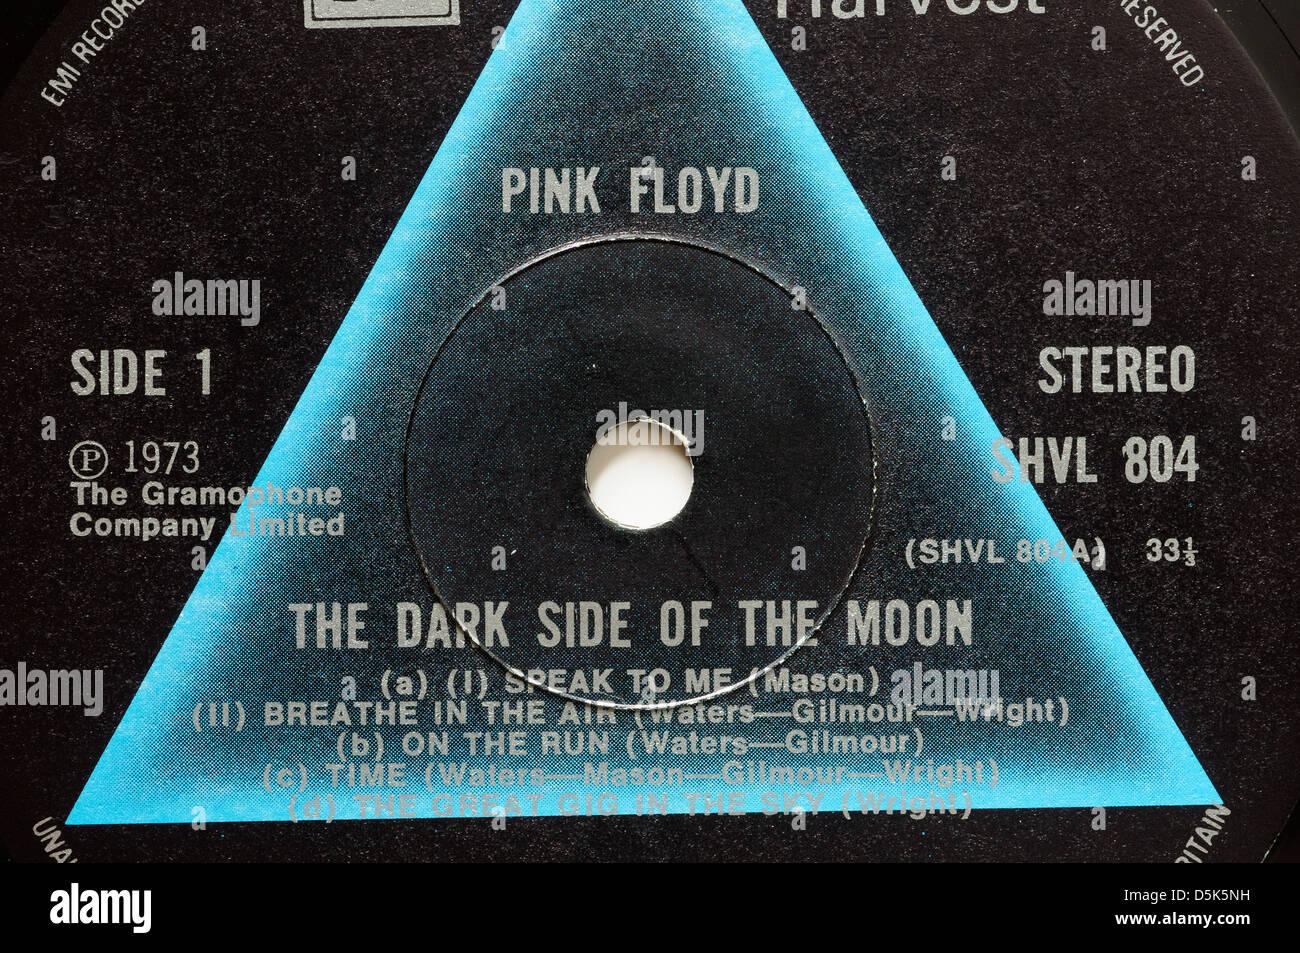 Pink Floyd - Dark Side Of The Moon (2016 Edition) - Vinyl